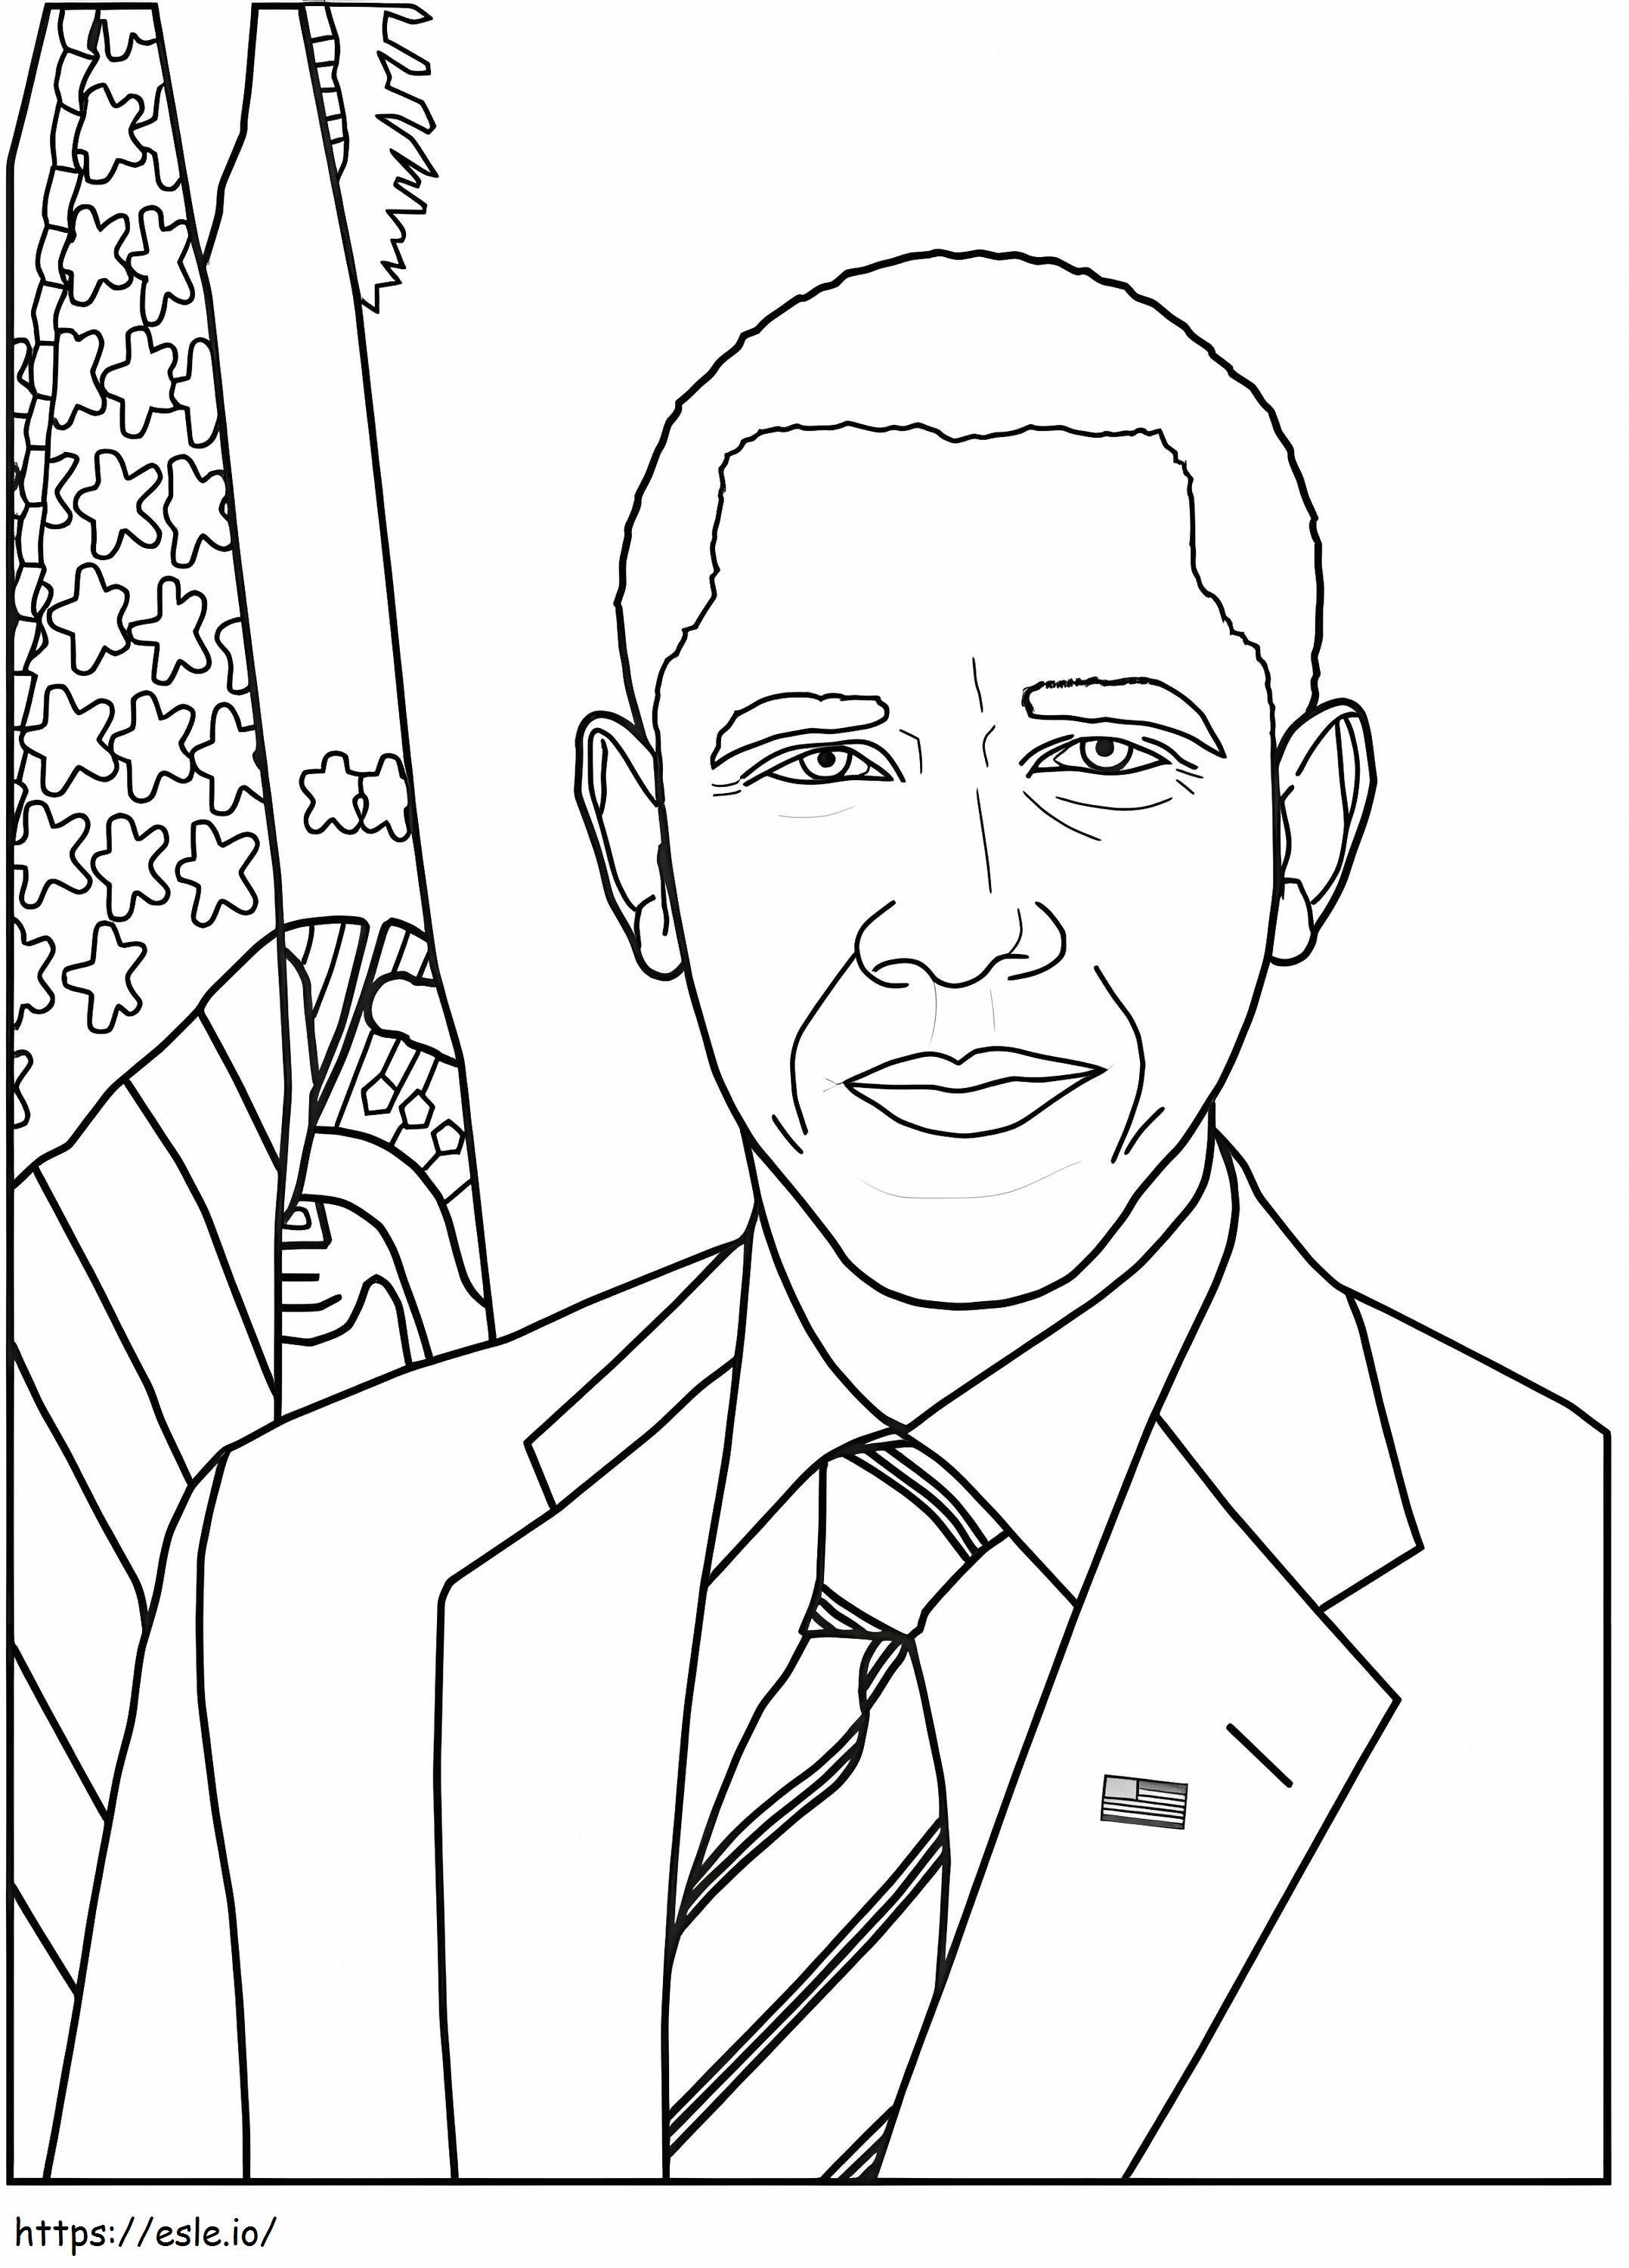 Cara De Obama kleurplaat kleurplaat